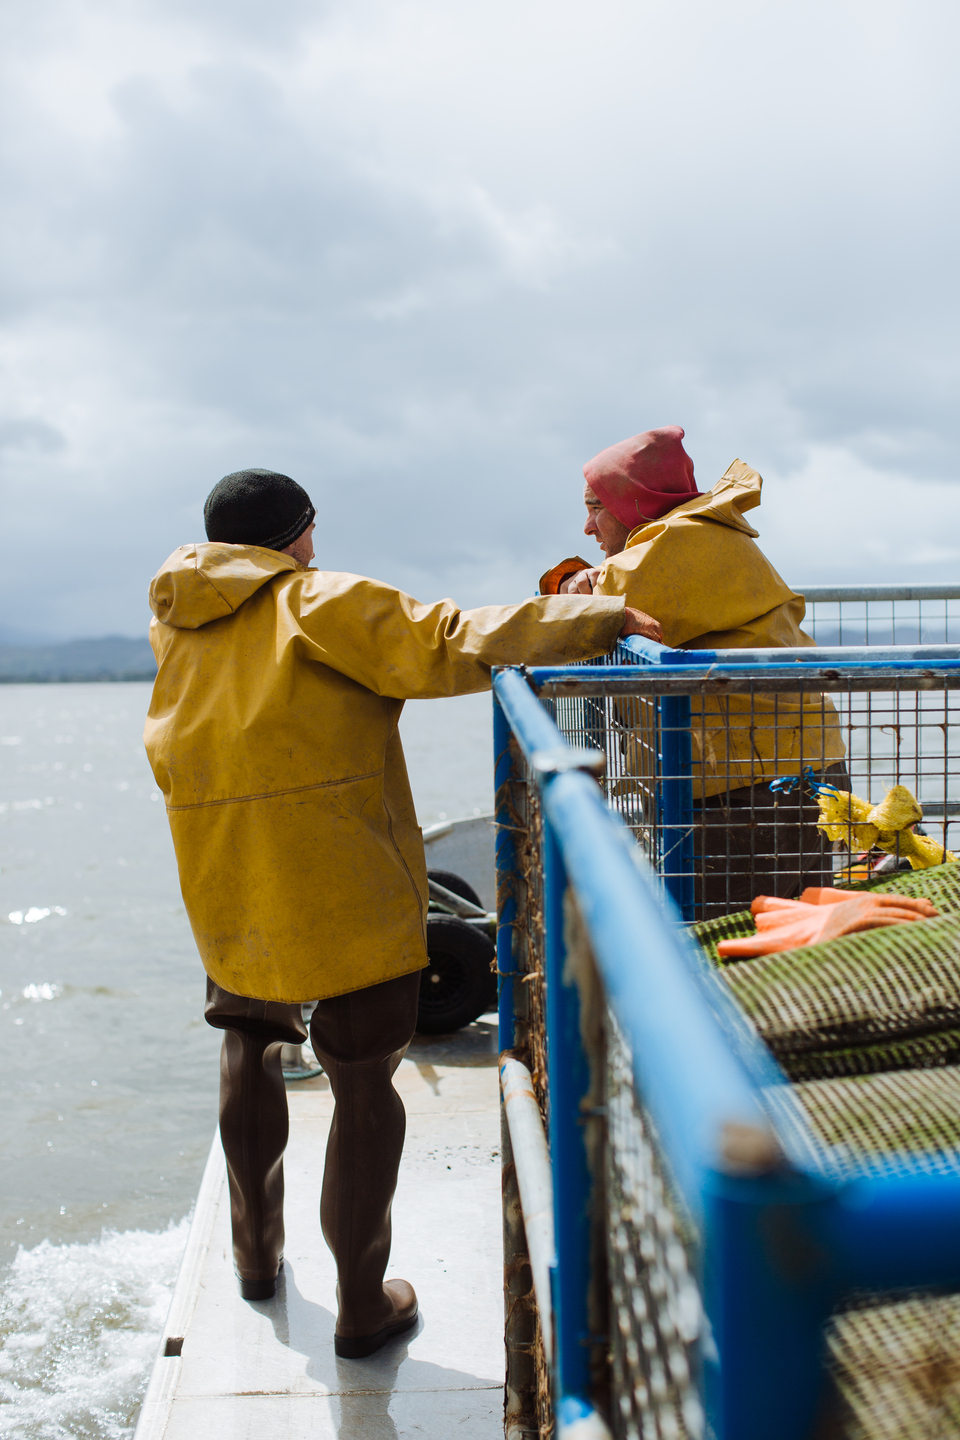 Cromane Bay Shellfish on the boat @edschofieldphoto